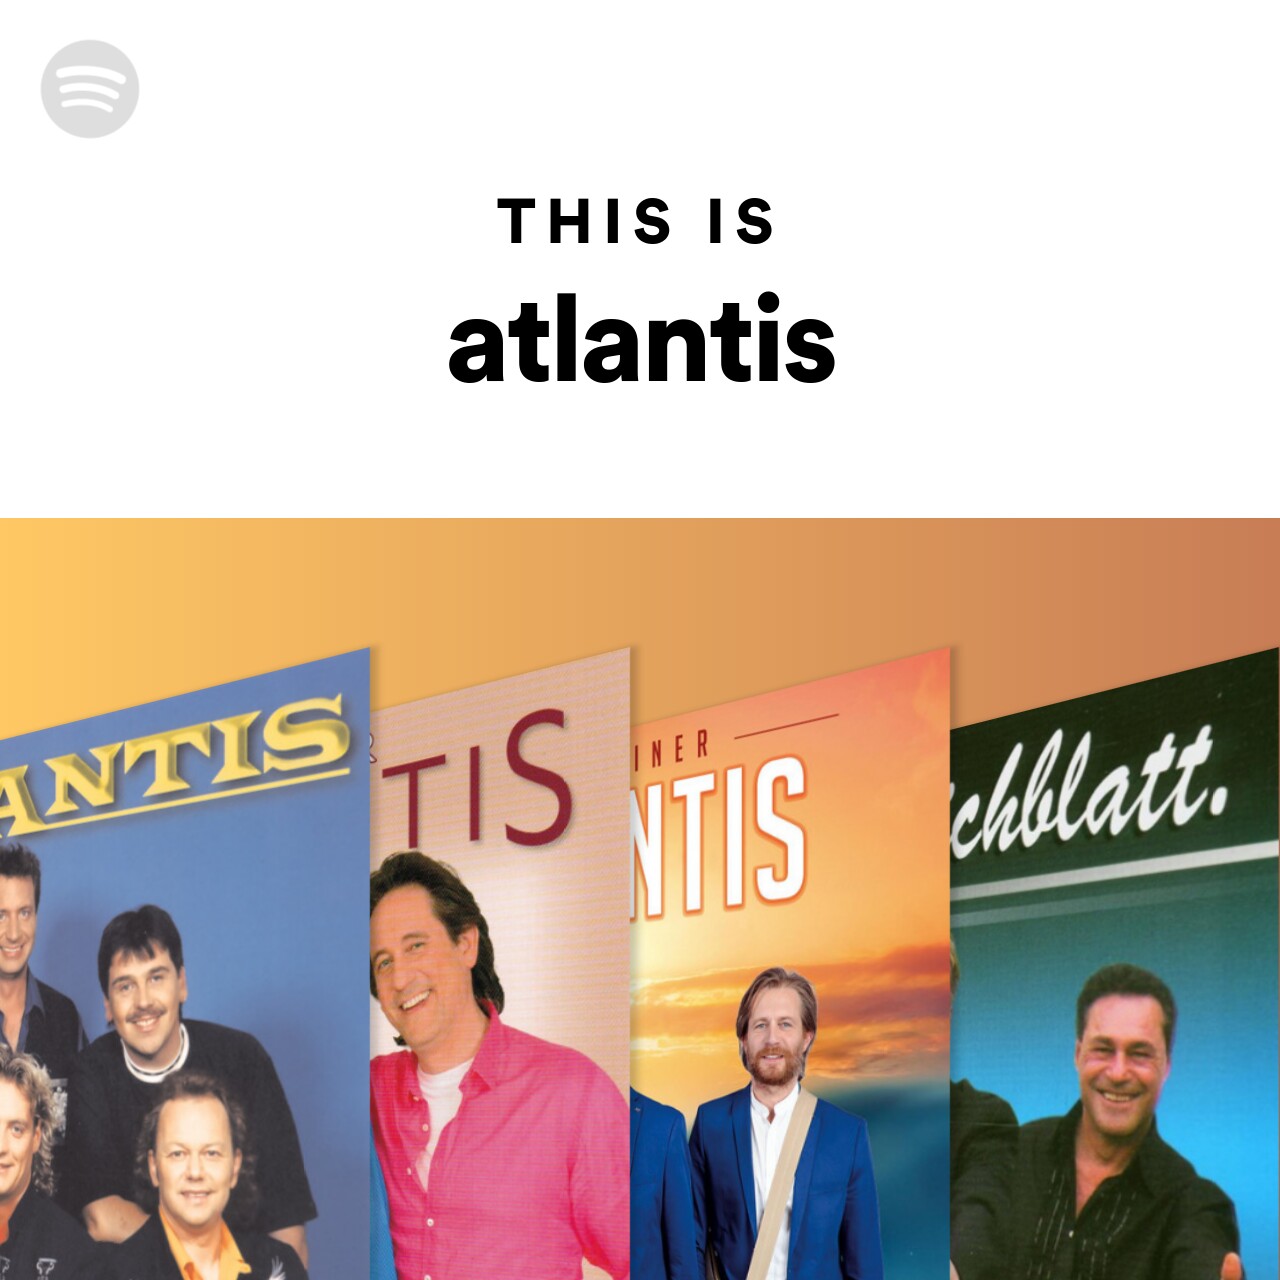 This Is atlantis